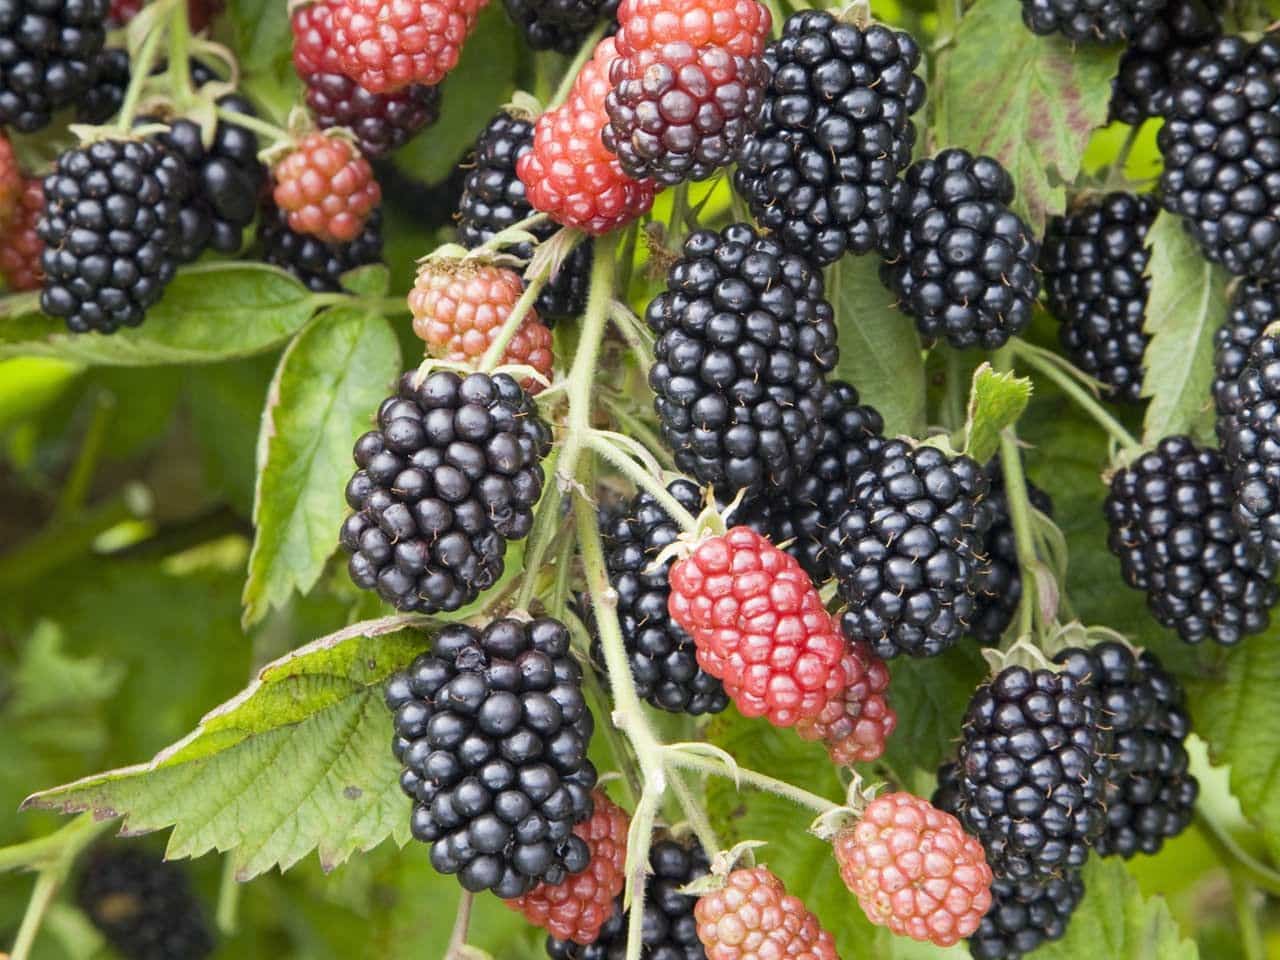 Odrůda Cherokee blackberry